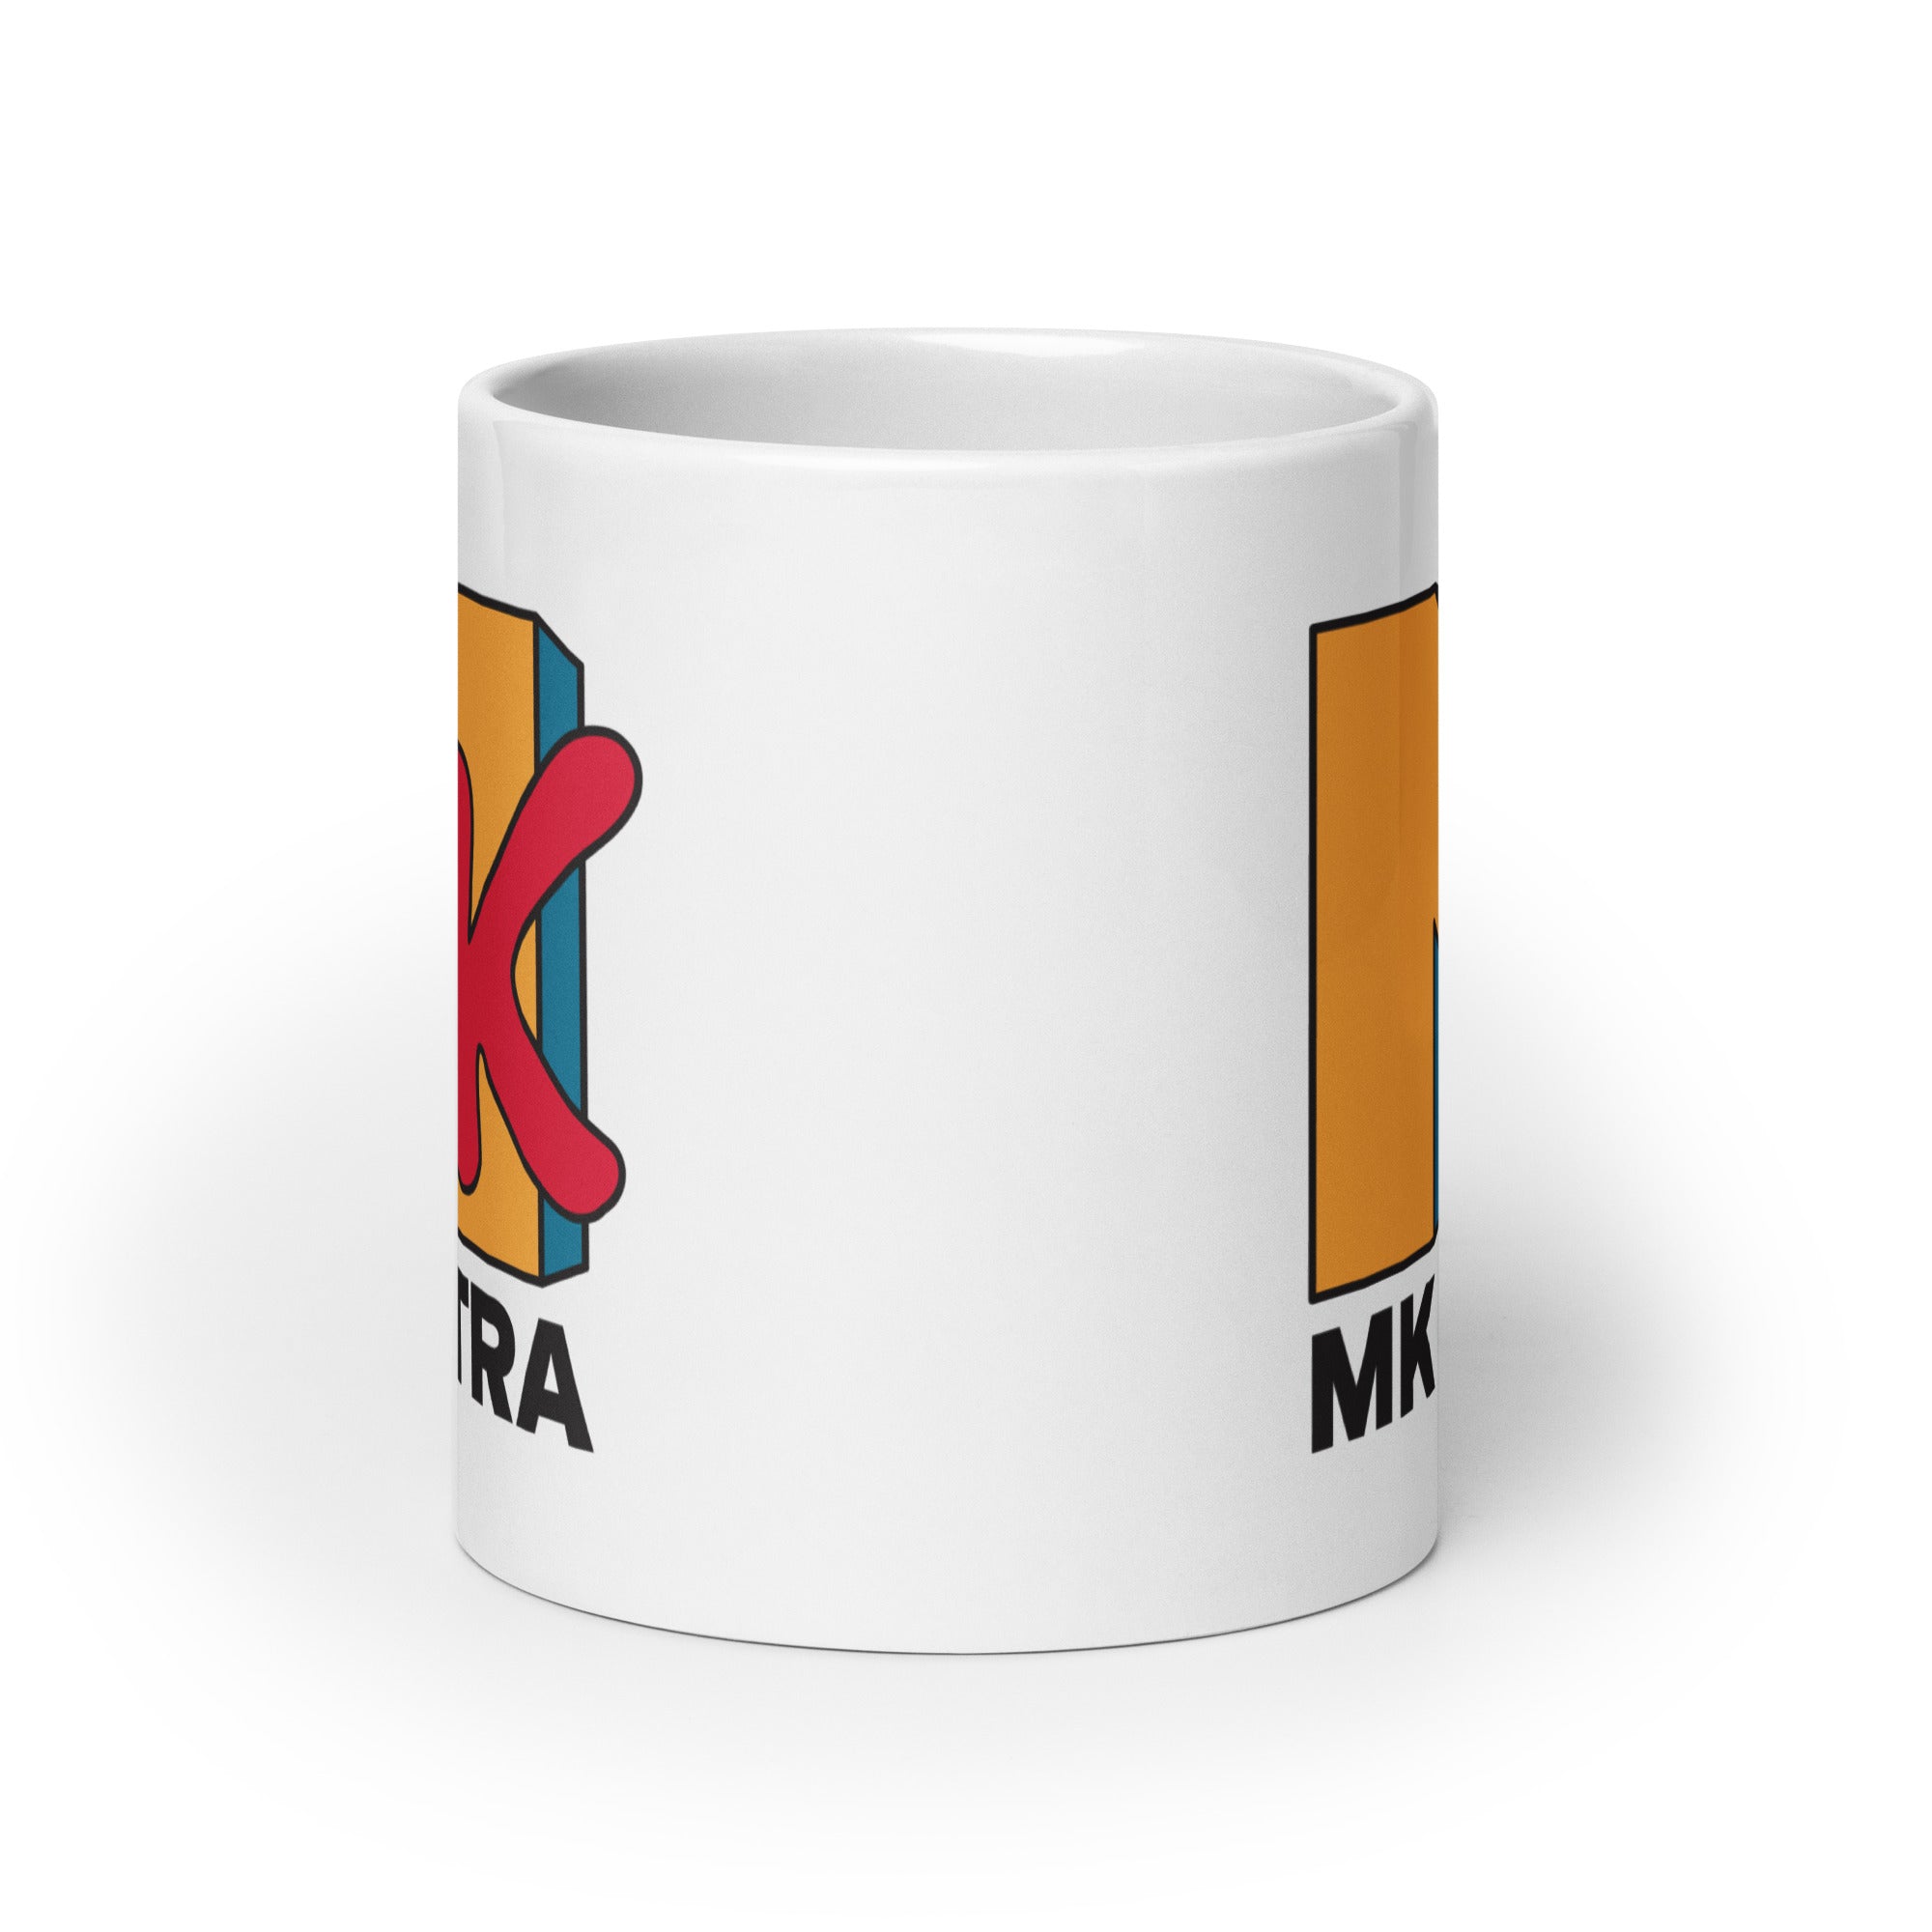 MK Ultra Parody Coffee Mug